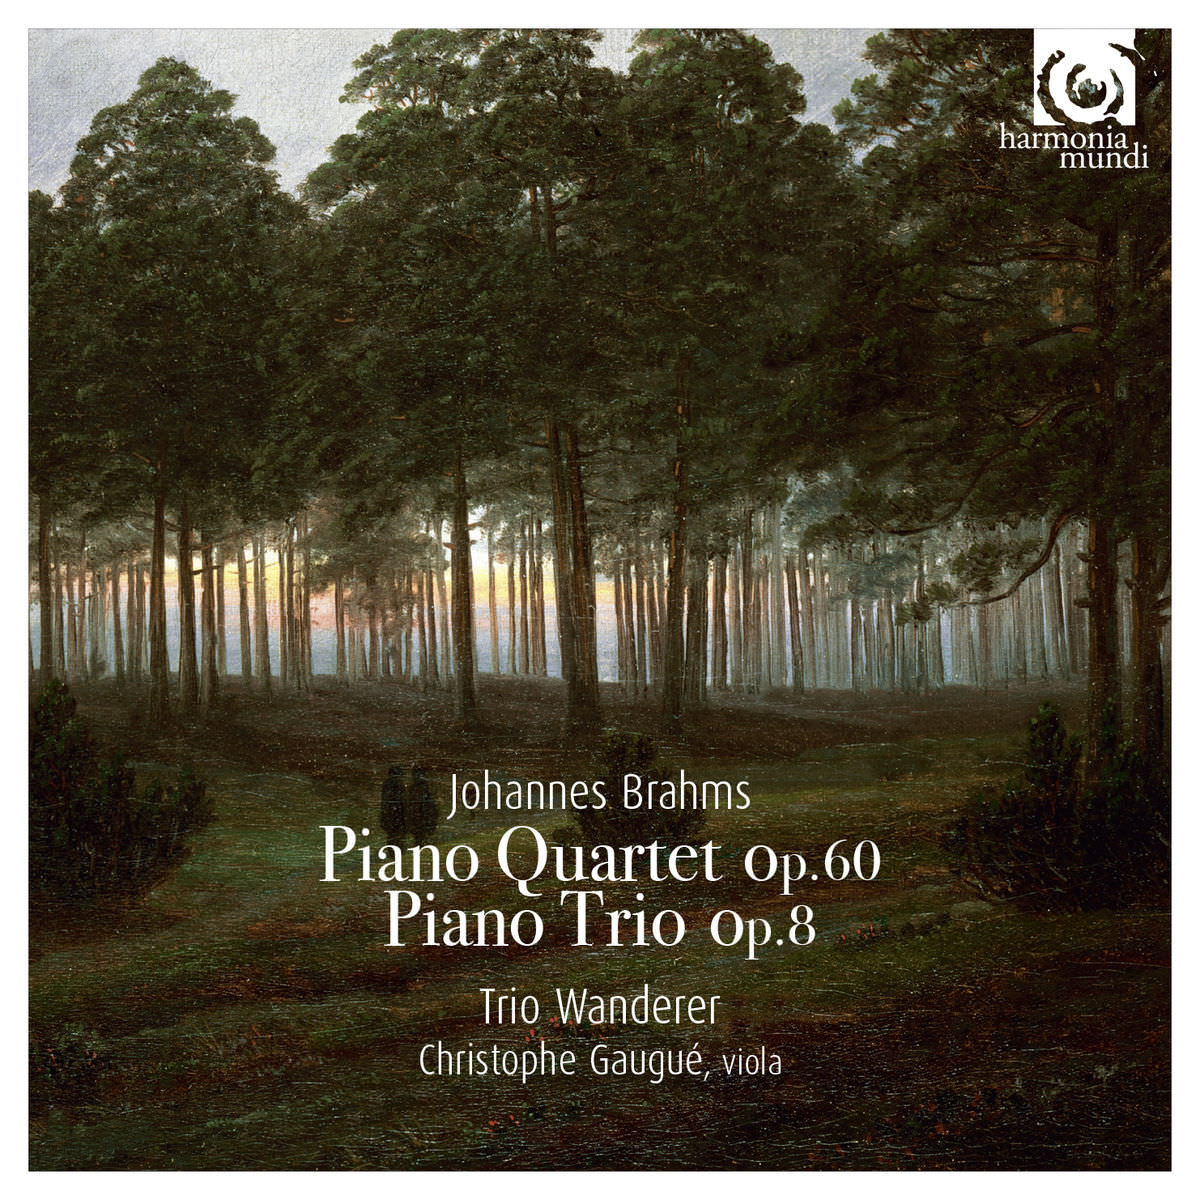 Trio Wanderer & Christophe Gaugue – Brahms: Piano Quartet, Op. 60 & Piano Trio, Op. 8 (2016) [Qobuz FLAC 24bit/96kHz]